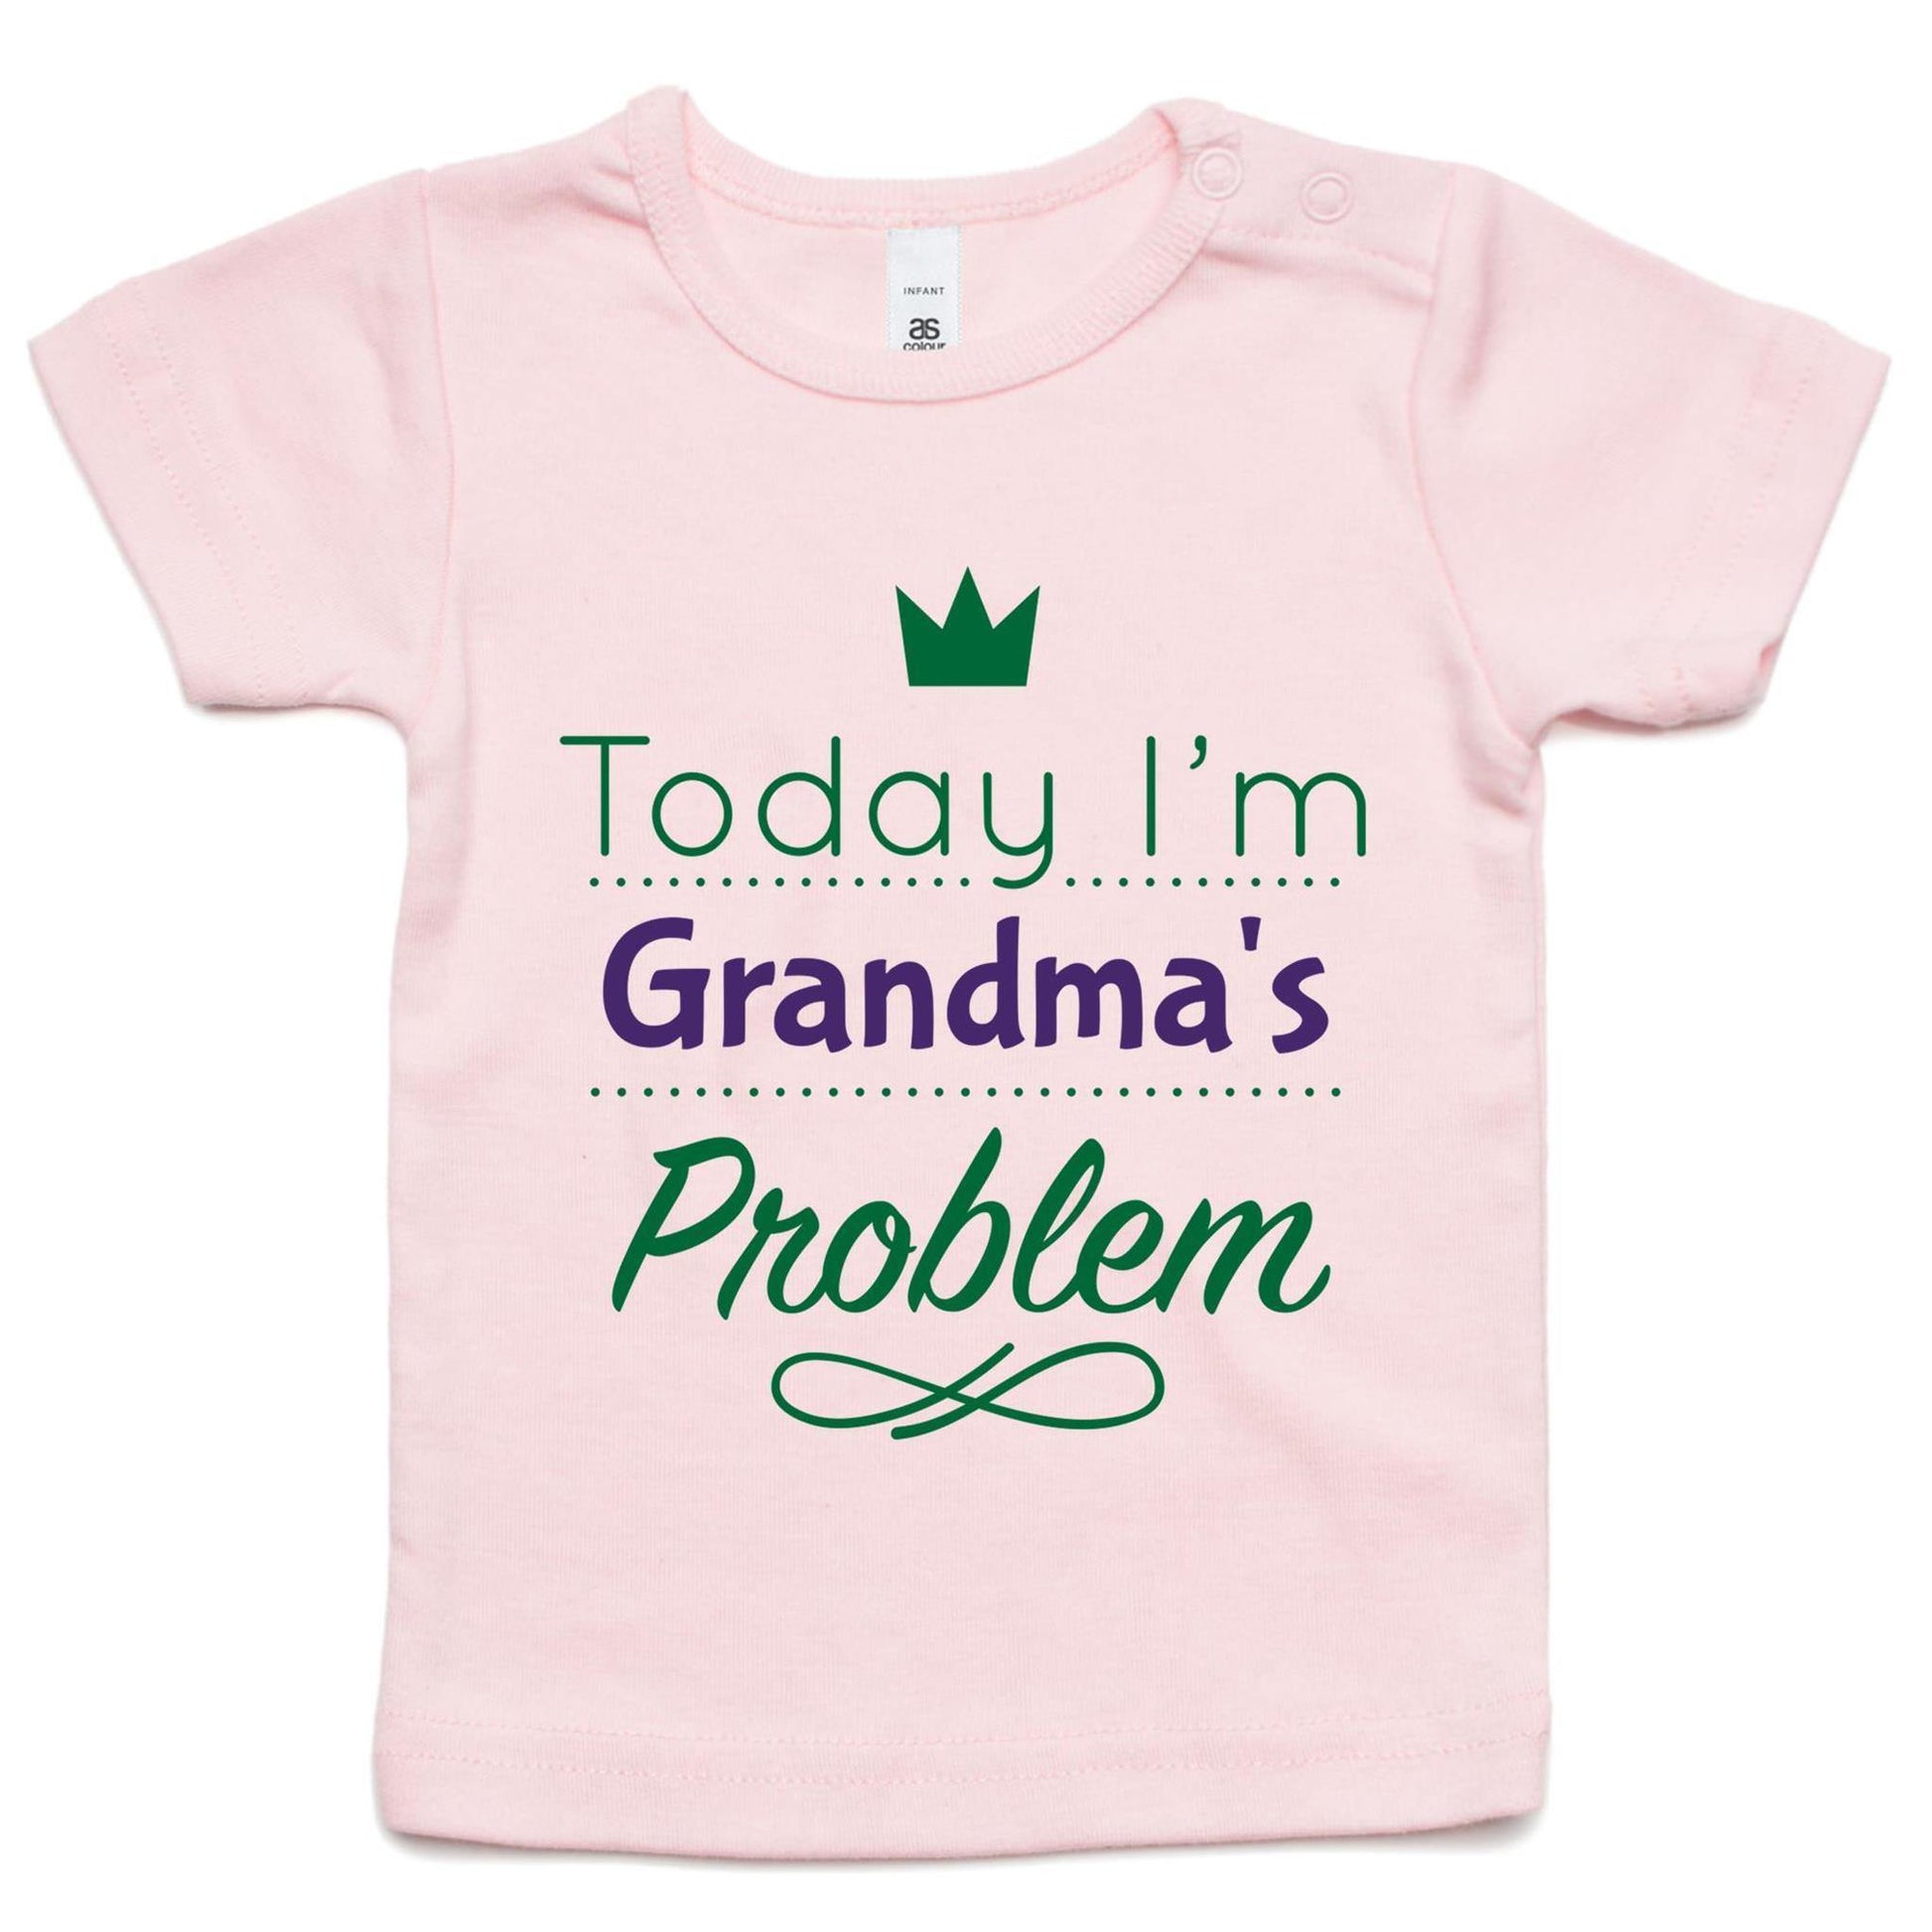 Today I'm Grandma's Problem - Baby T-shirt Pink Baby T-shirt kids